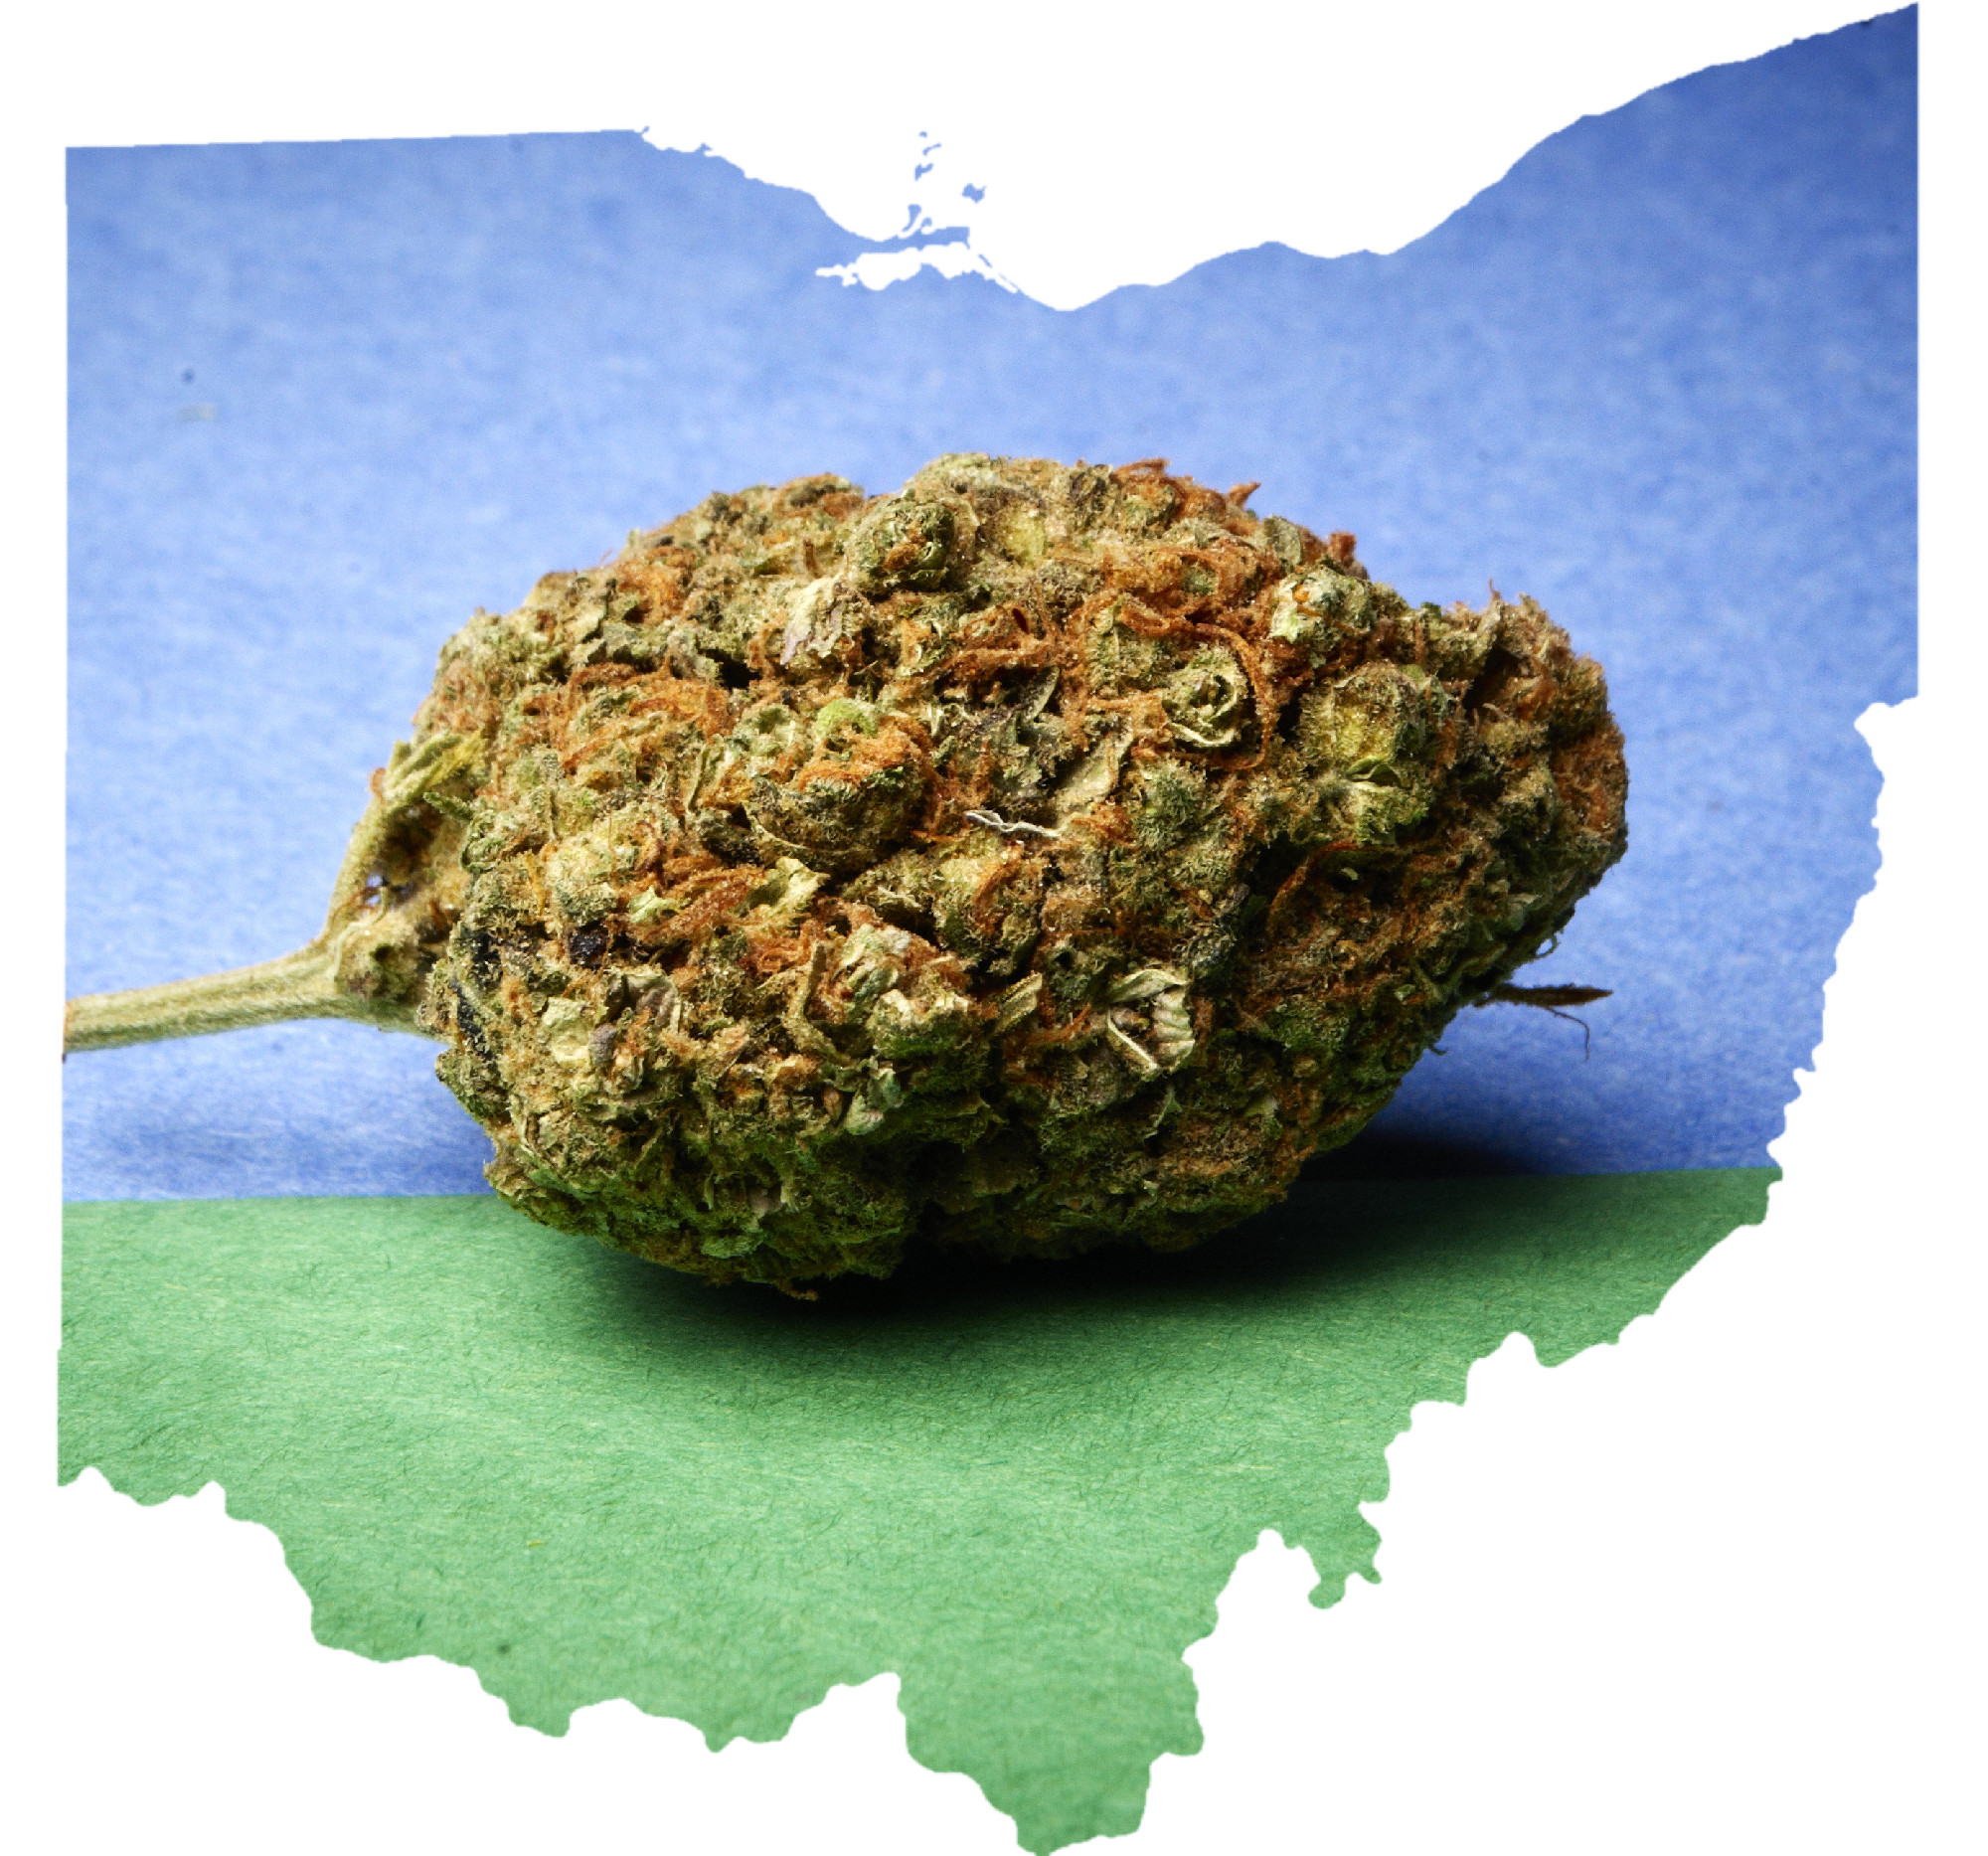 Ohio Marijuana Laws